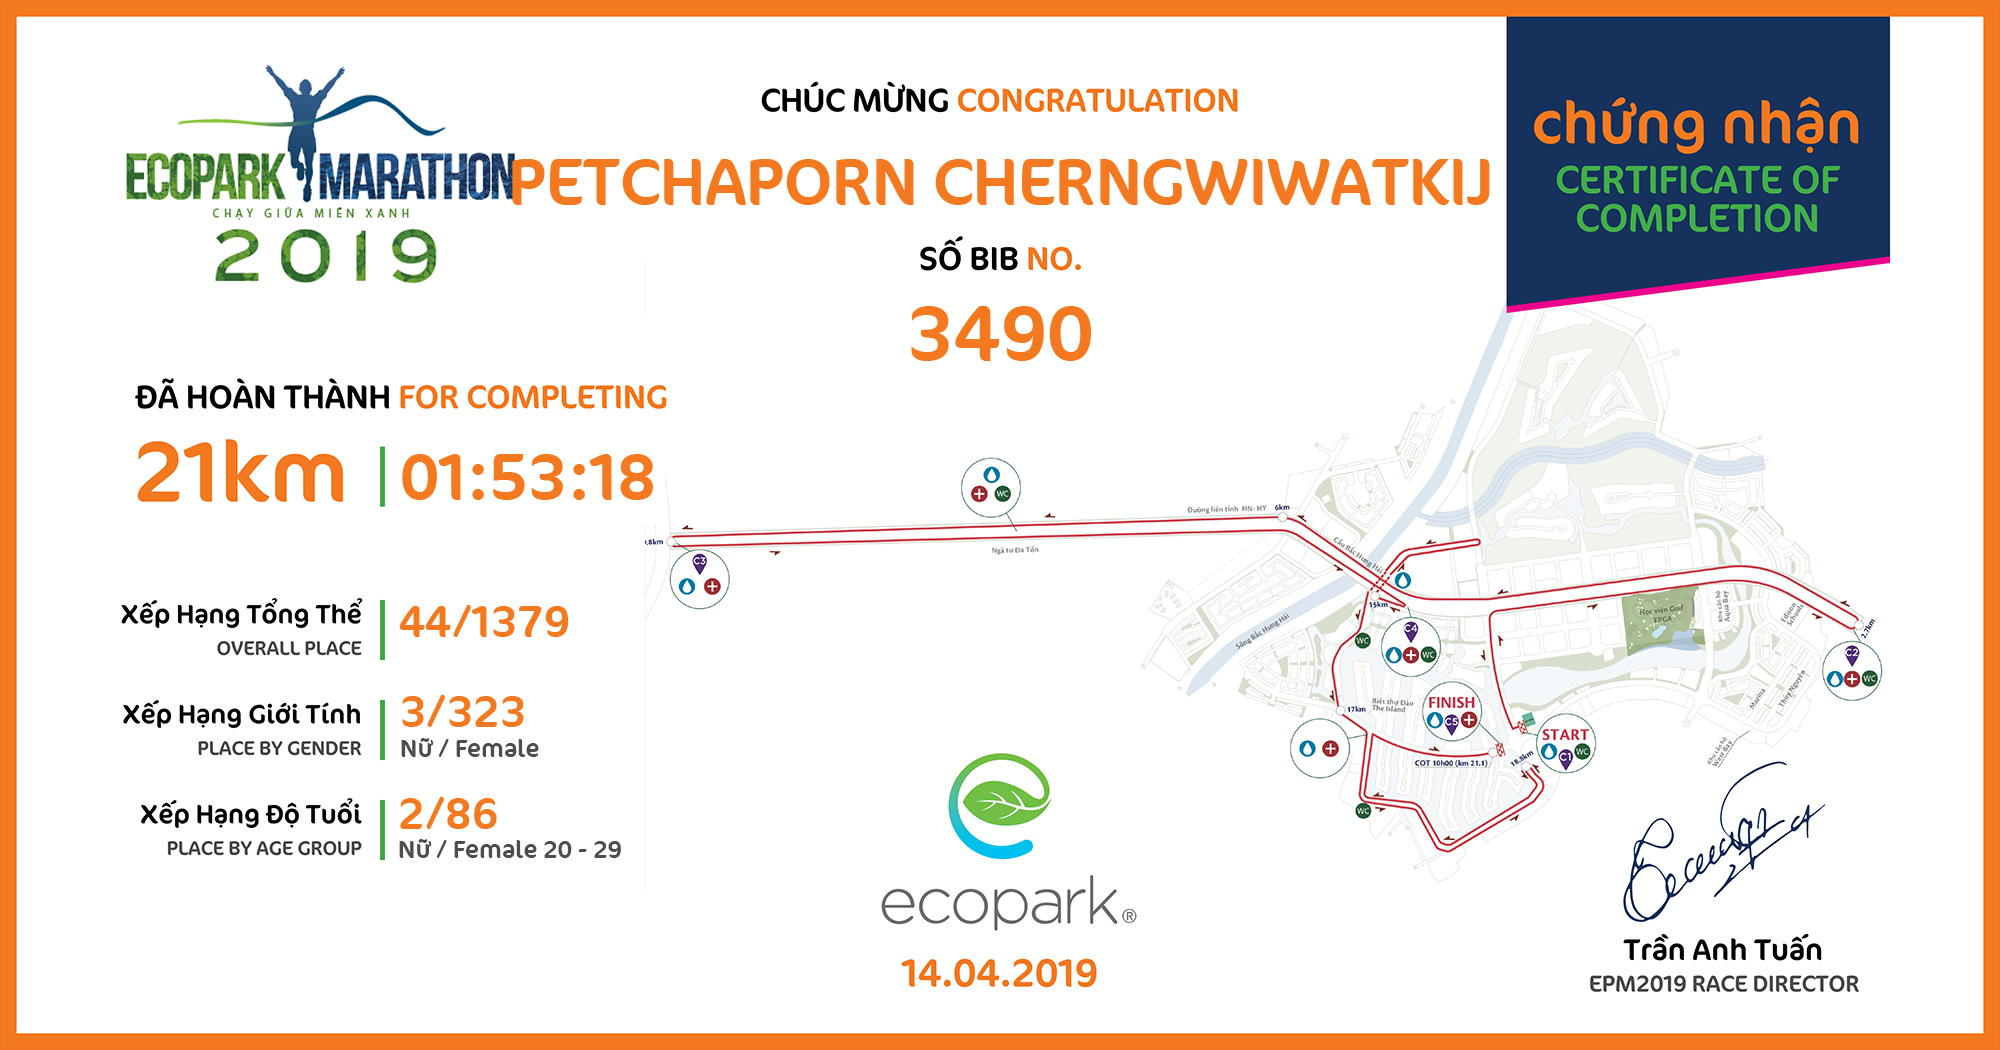 3490 - Petchaporn Cherngwiwatkij